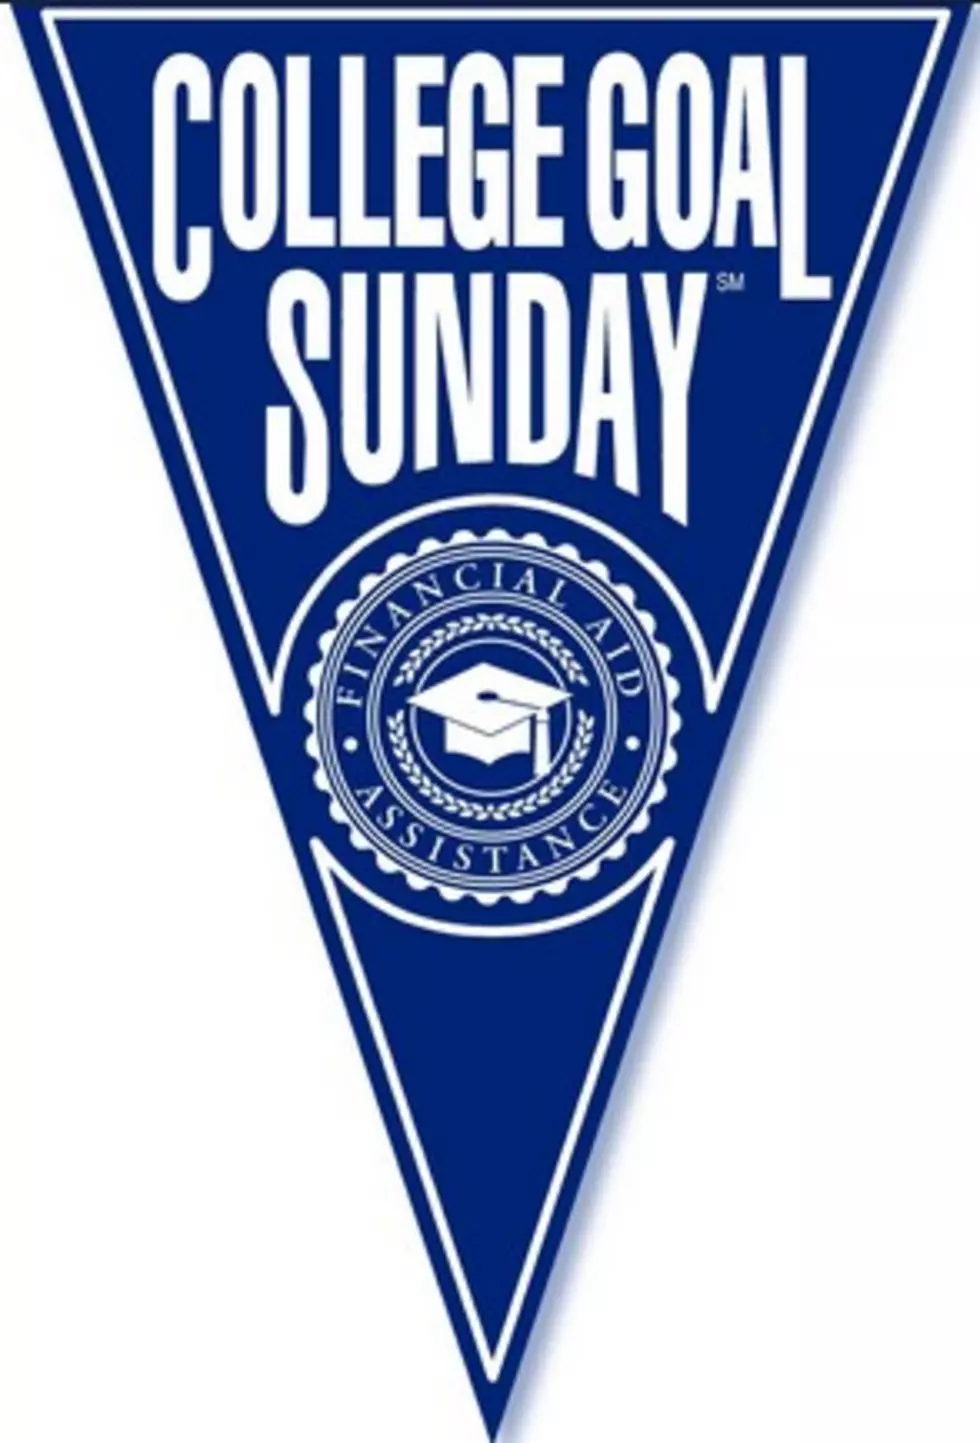 This Sunday, February 24, is Louisiana College Goal Sunday